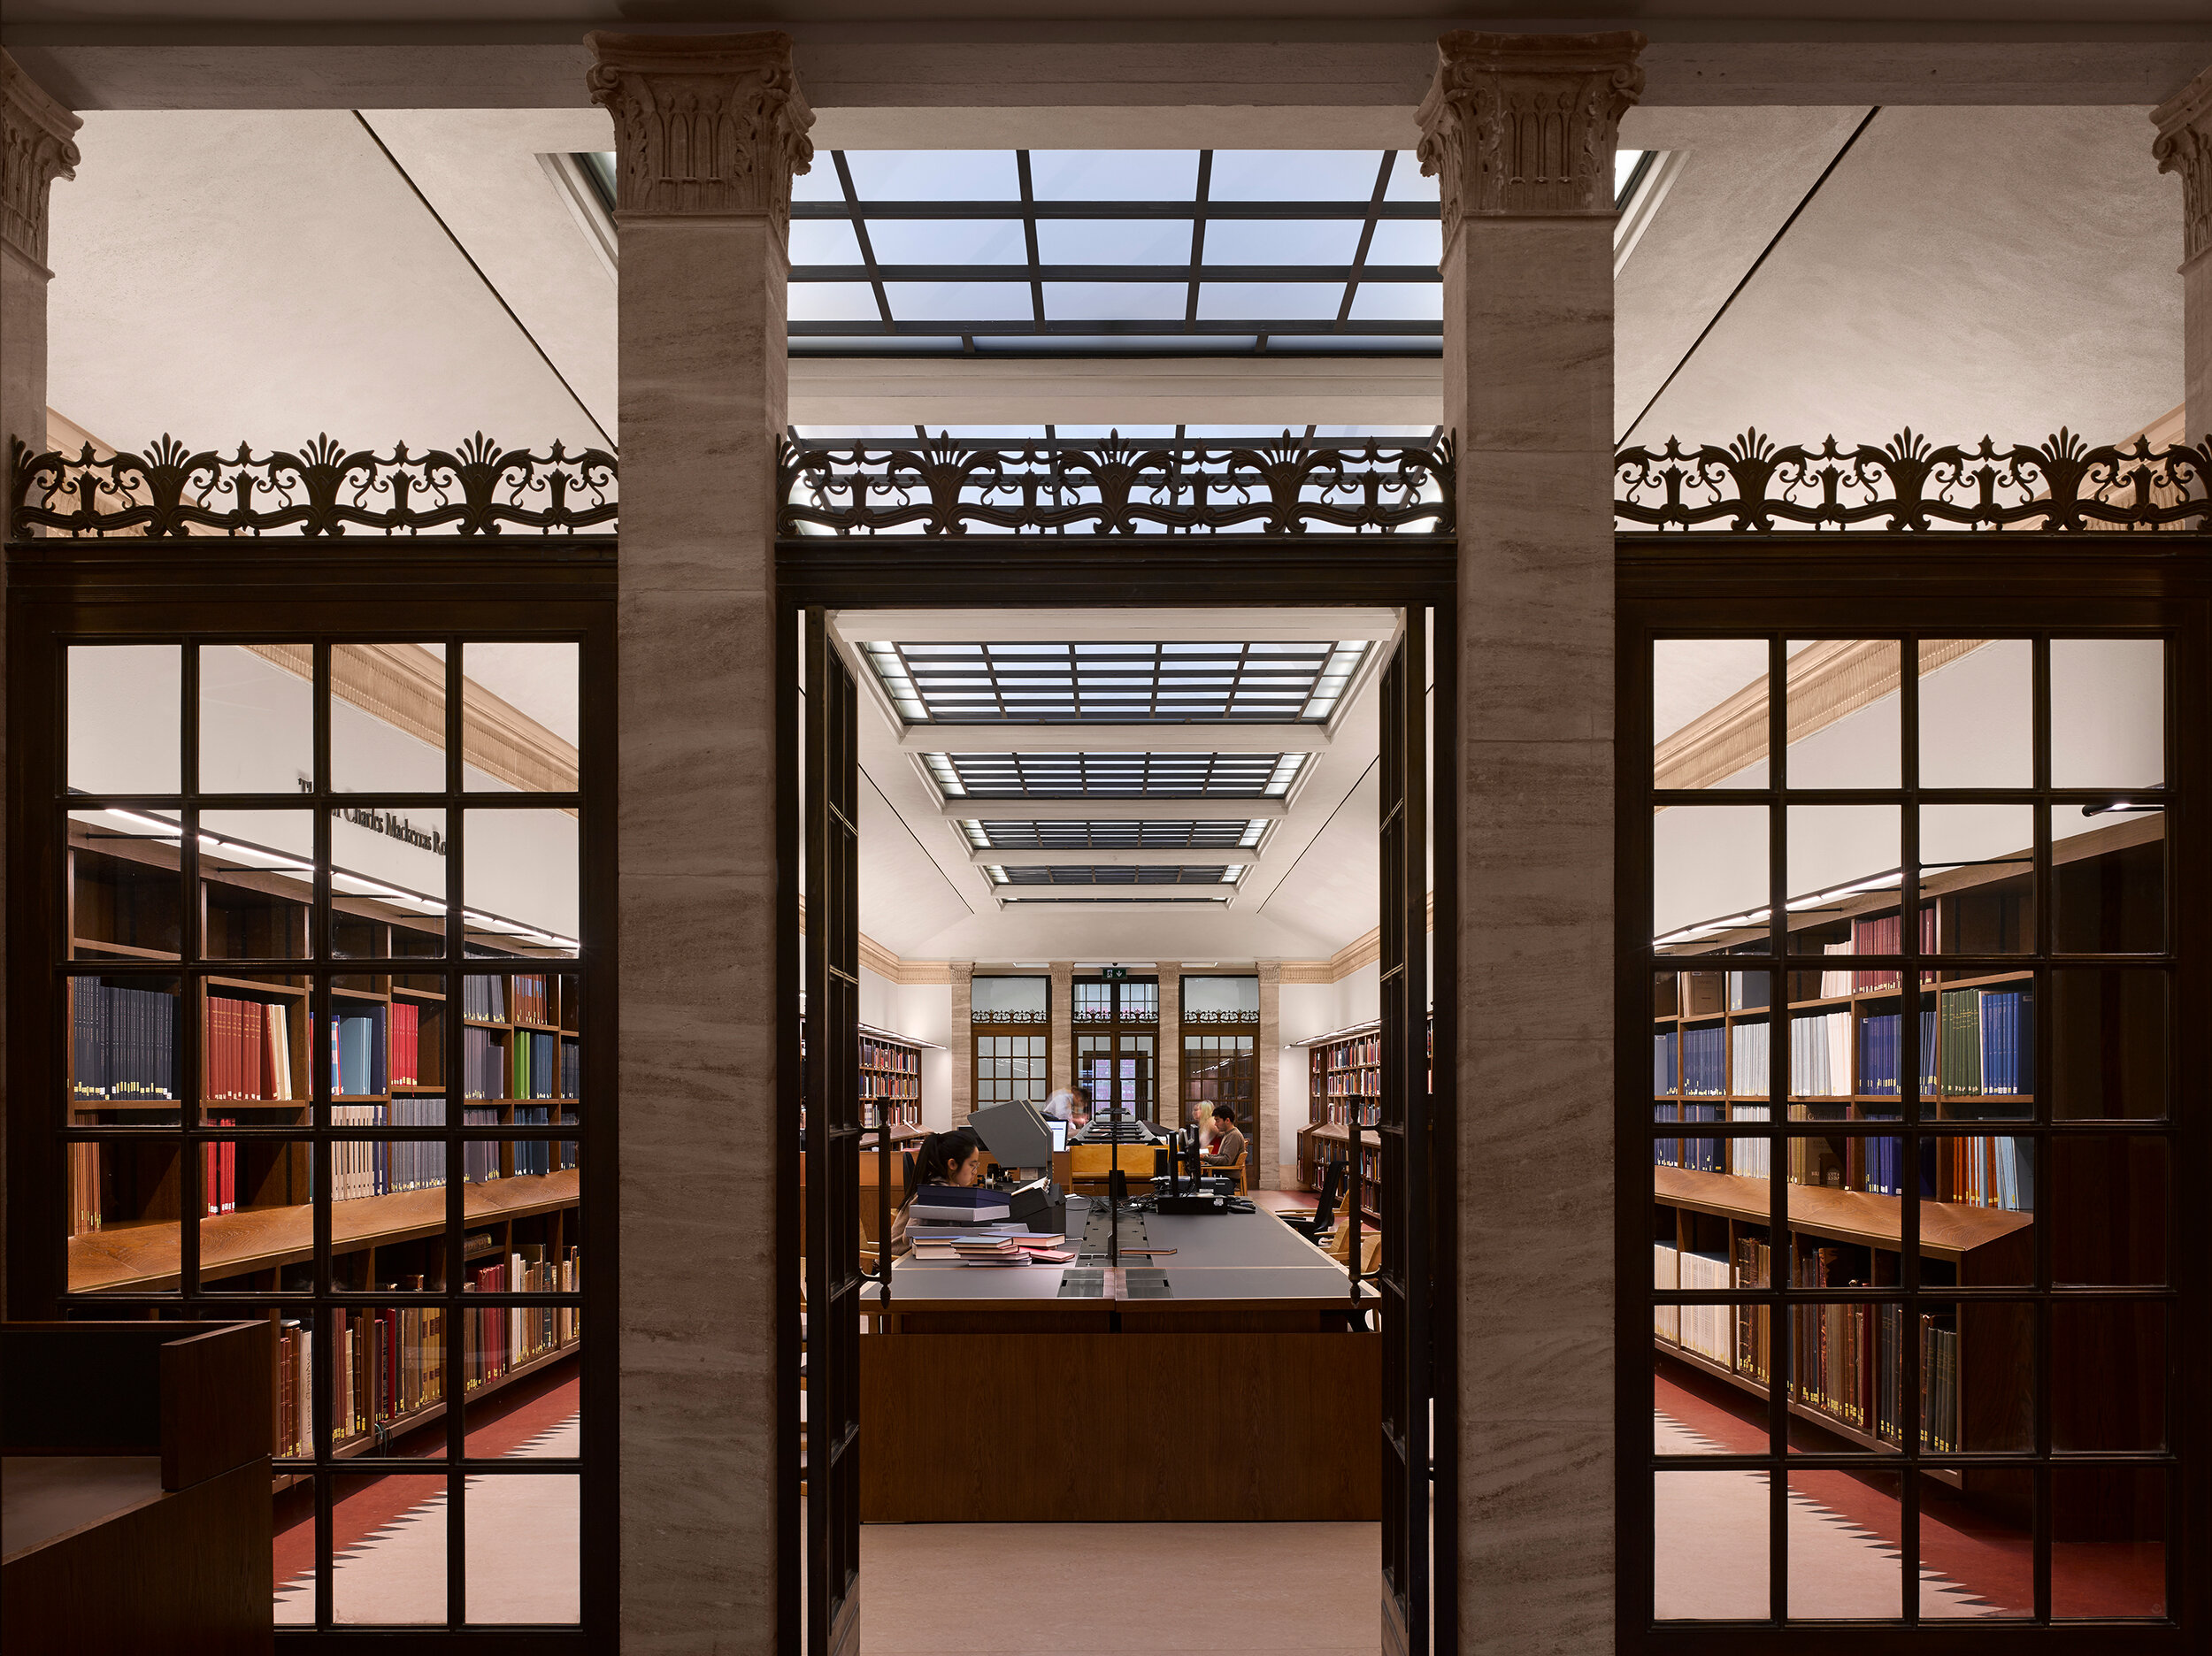 Using c library in c. Библиотека Оксфорда. Оксфордский университет библиотека. Библиотеку Уэстон. Библиотека (Bodleian Library) Оксфорда.